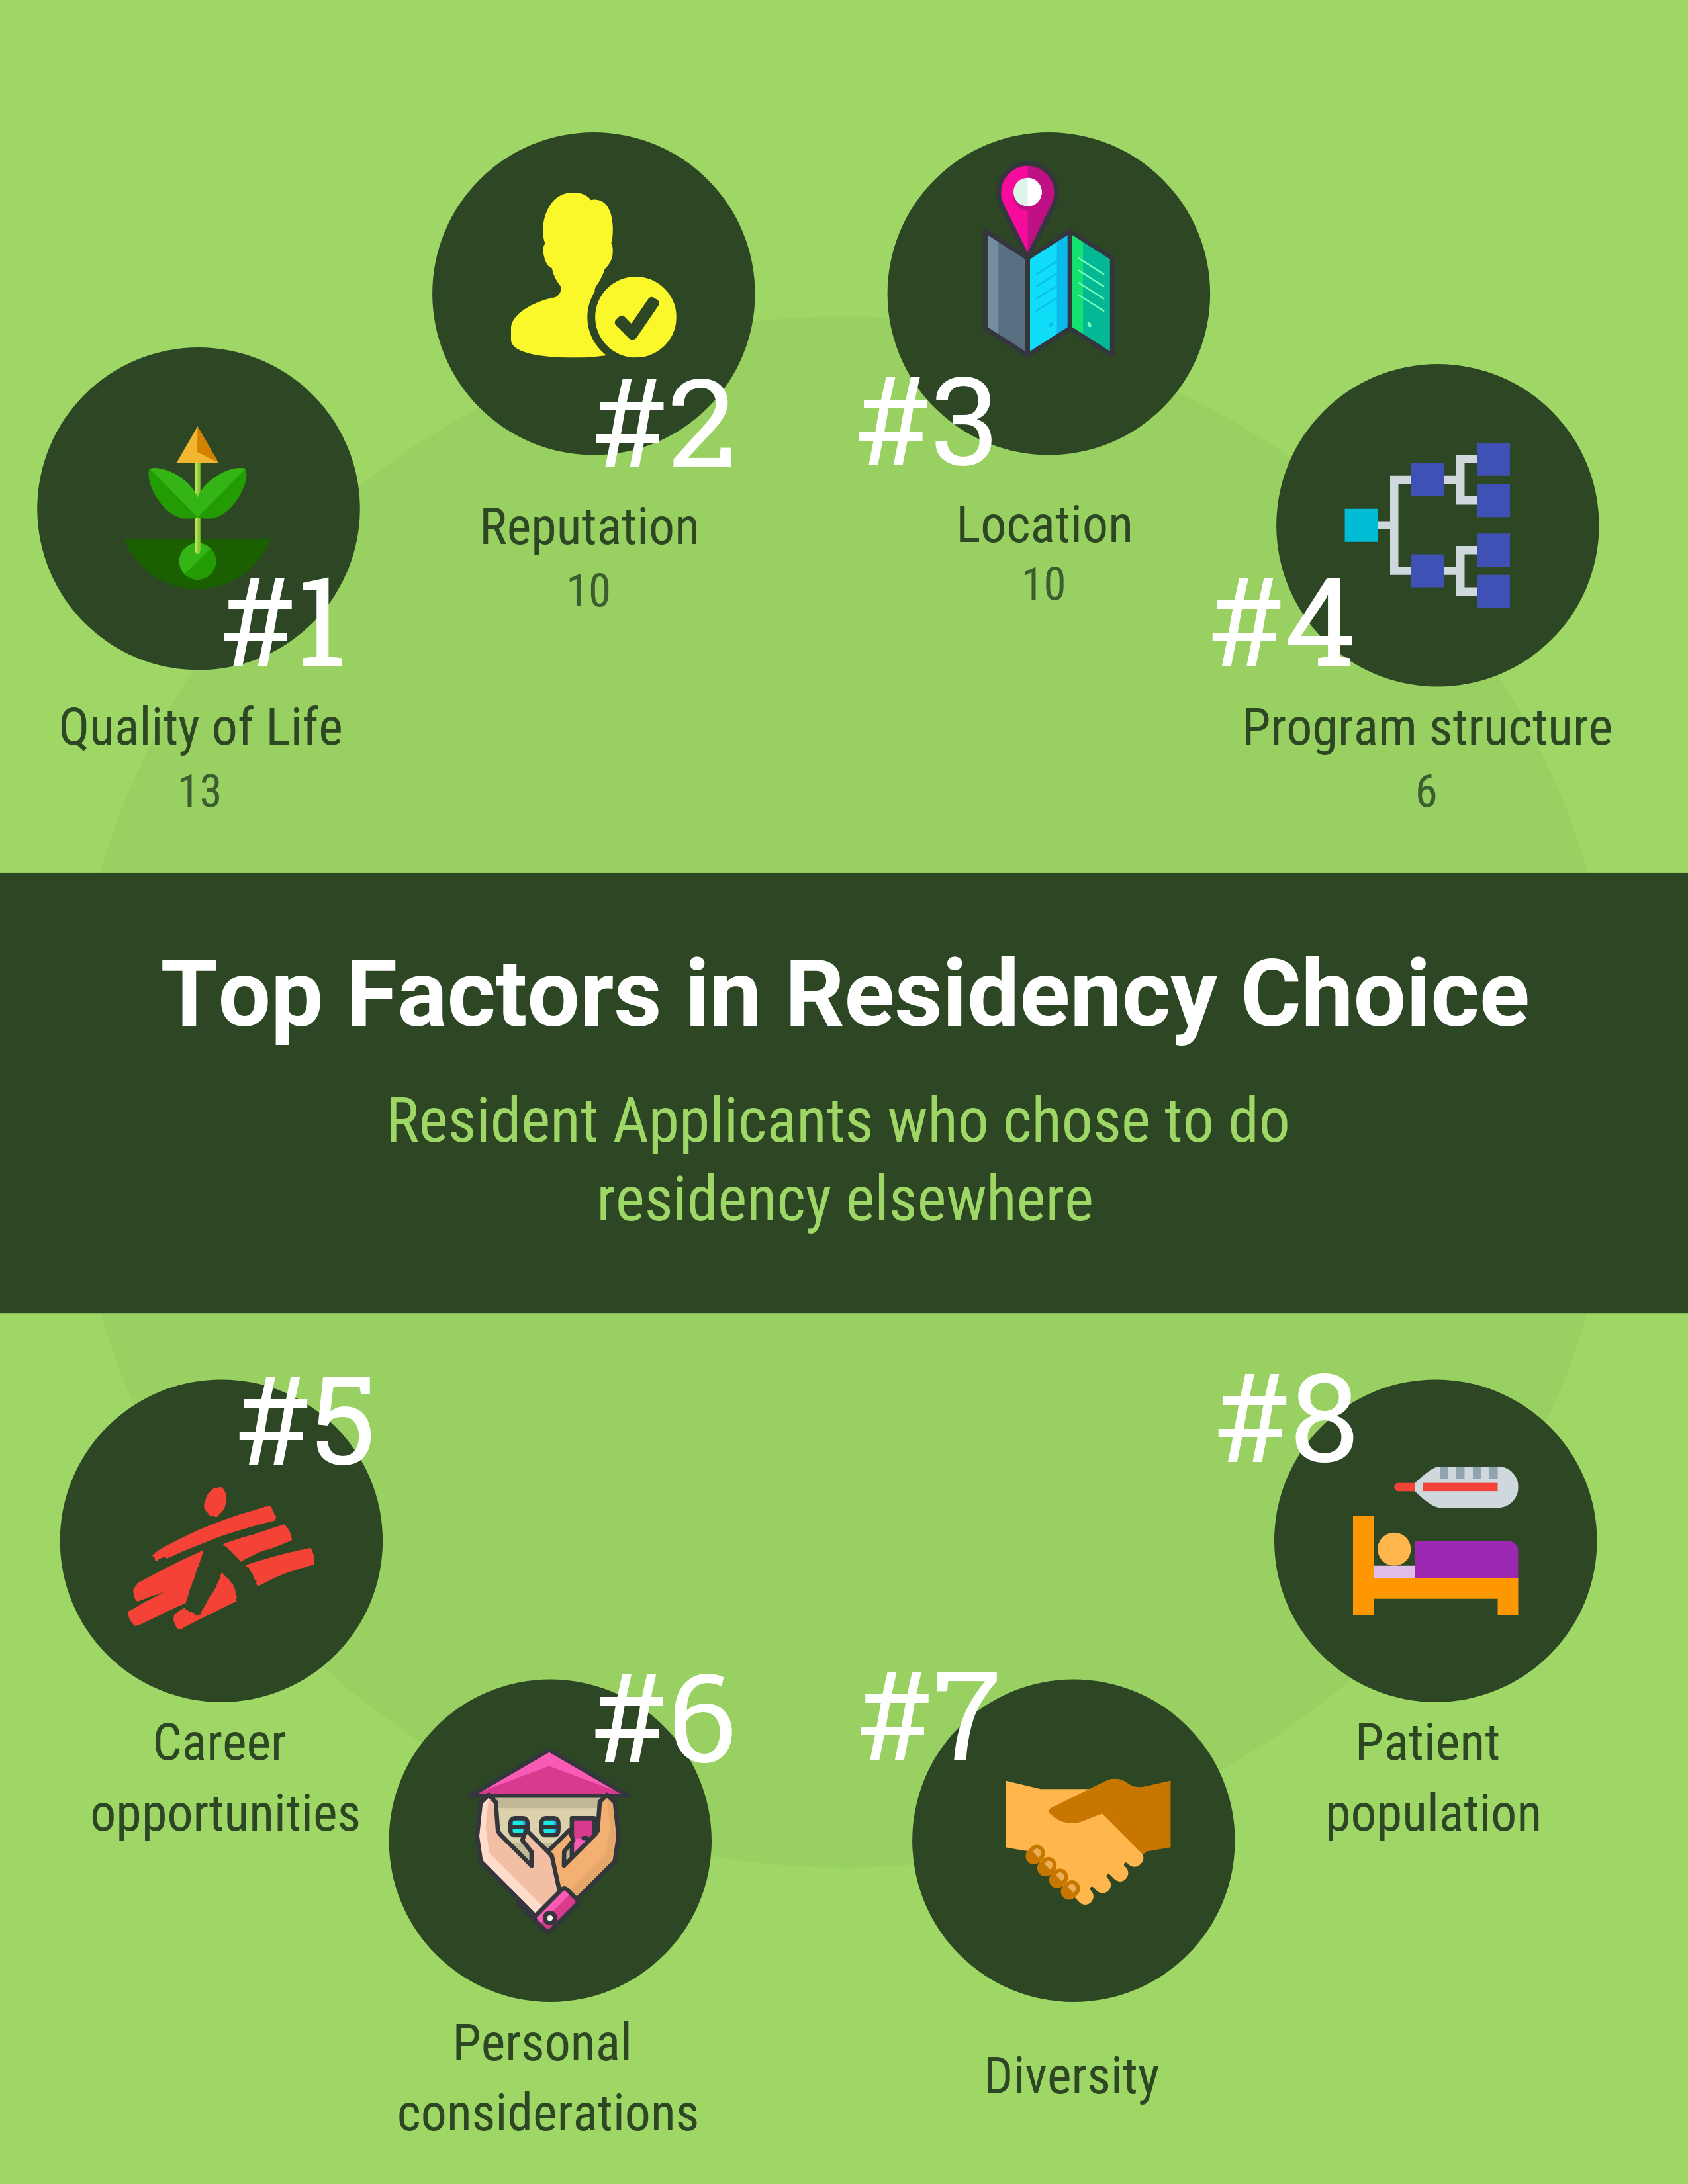 Residency choice factors